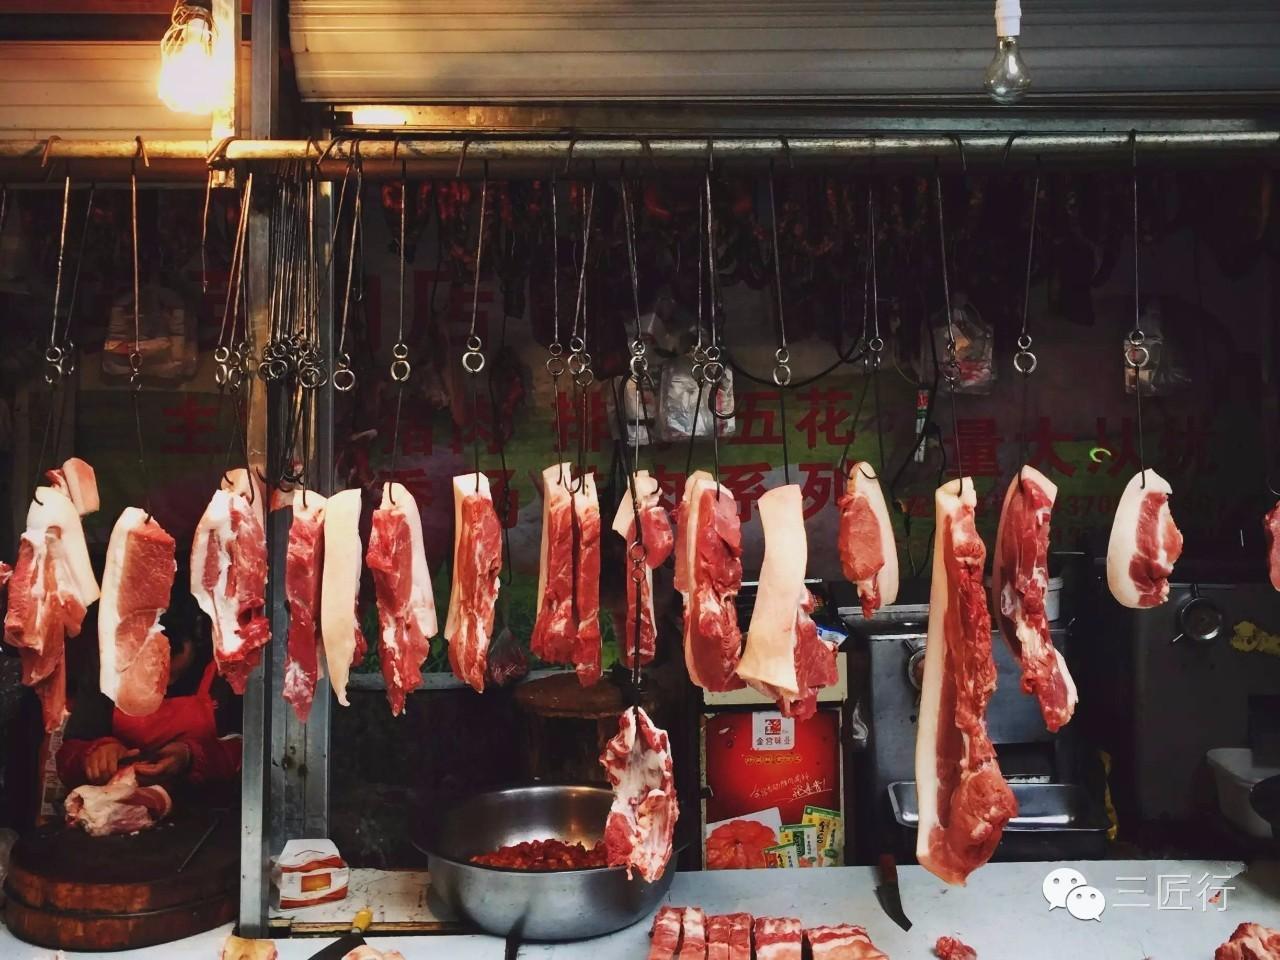 MEAT MATE鲜食肉铺 在专业的肉铺边买边吃-搜狐吃喝